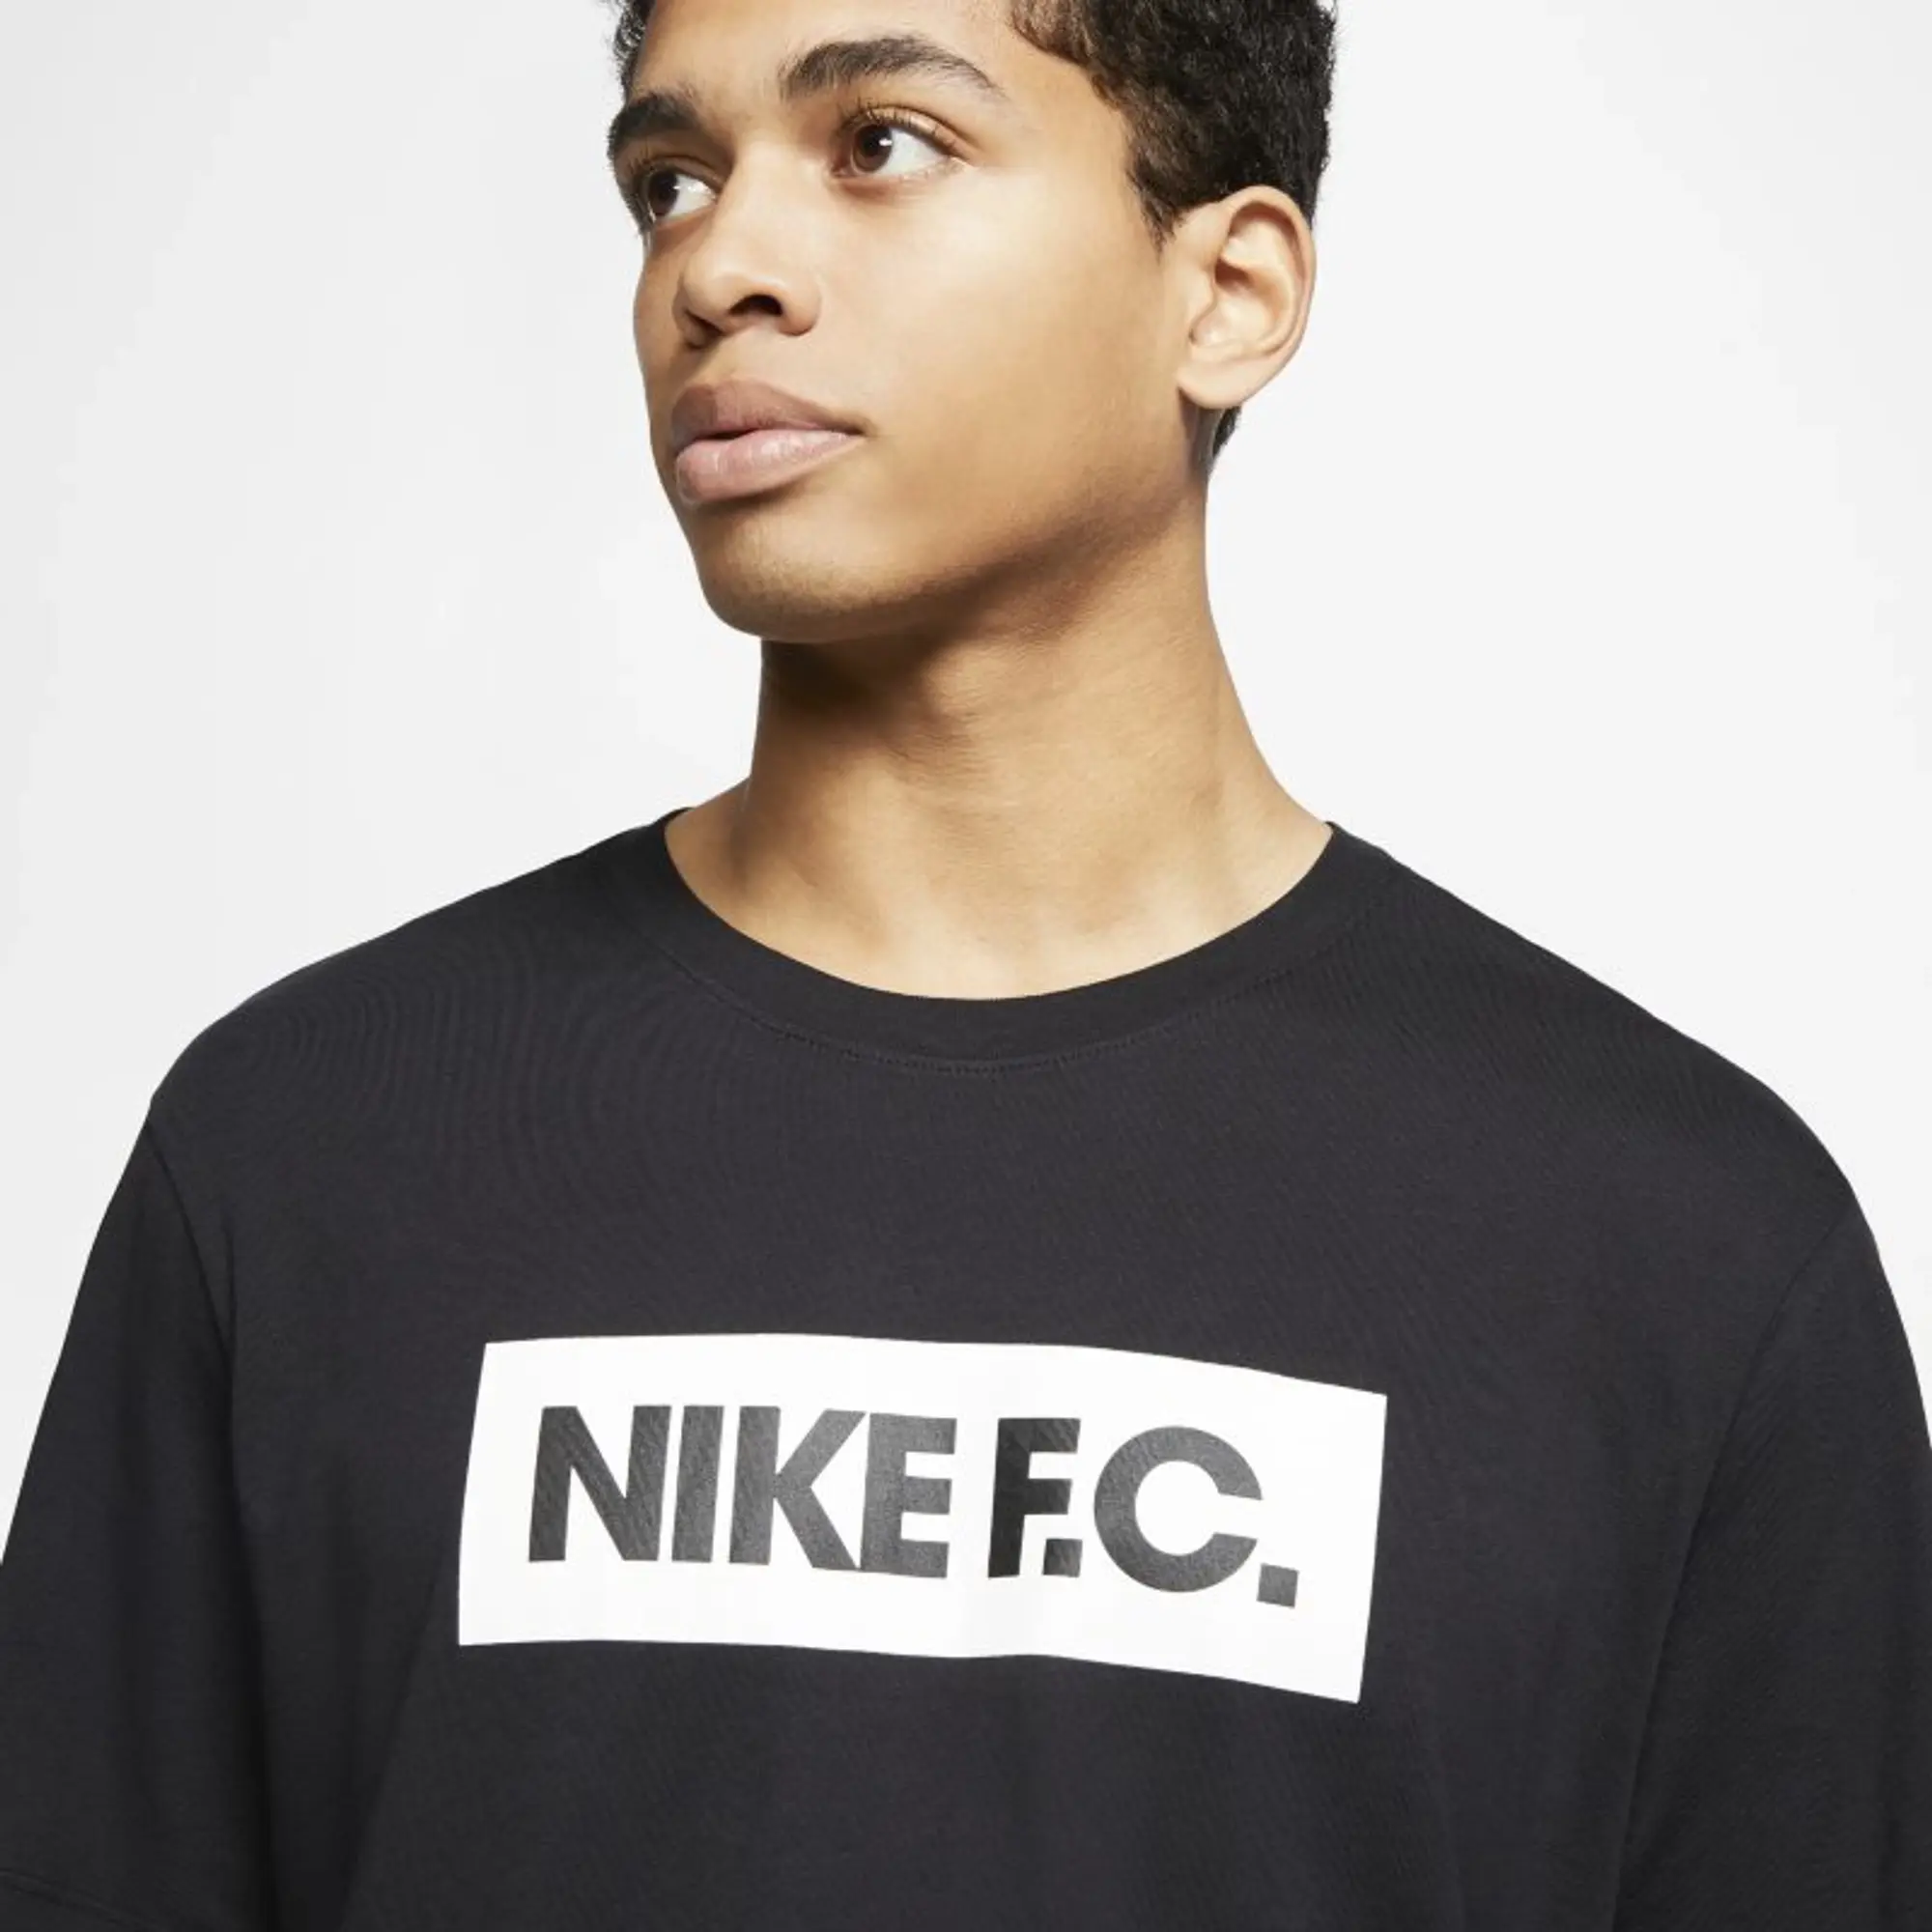 Nike FC T Shirt Mens